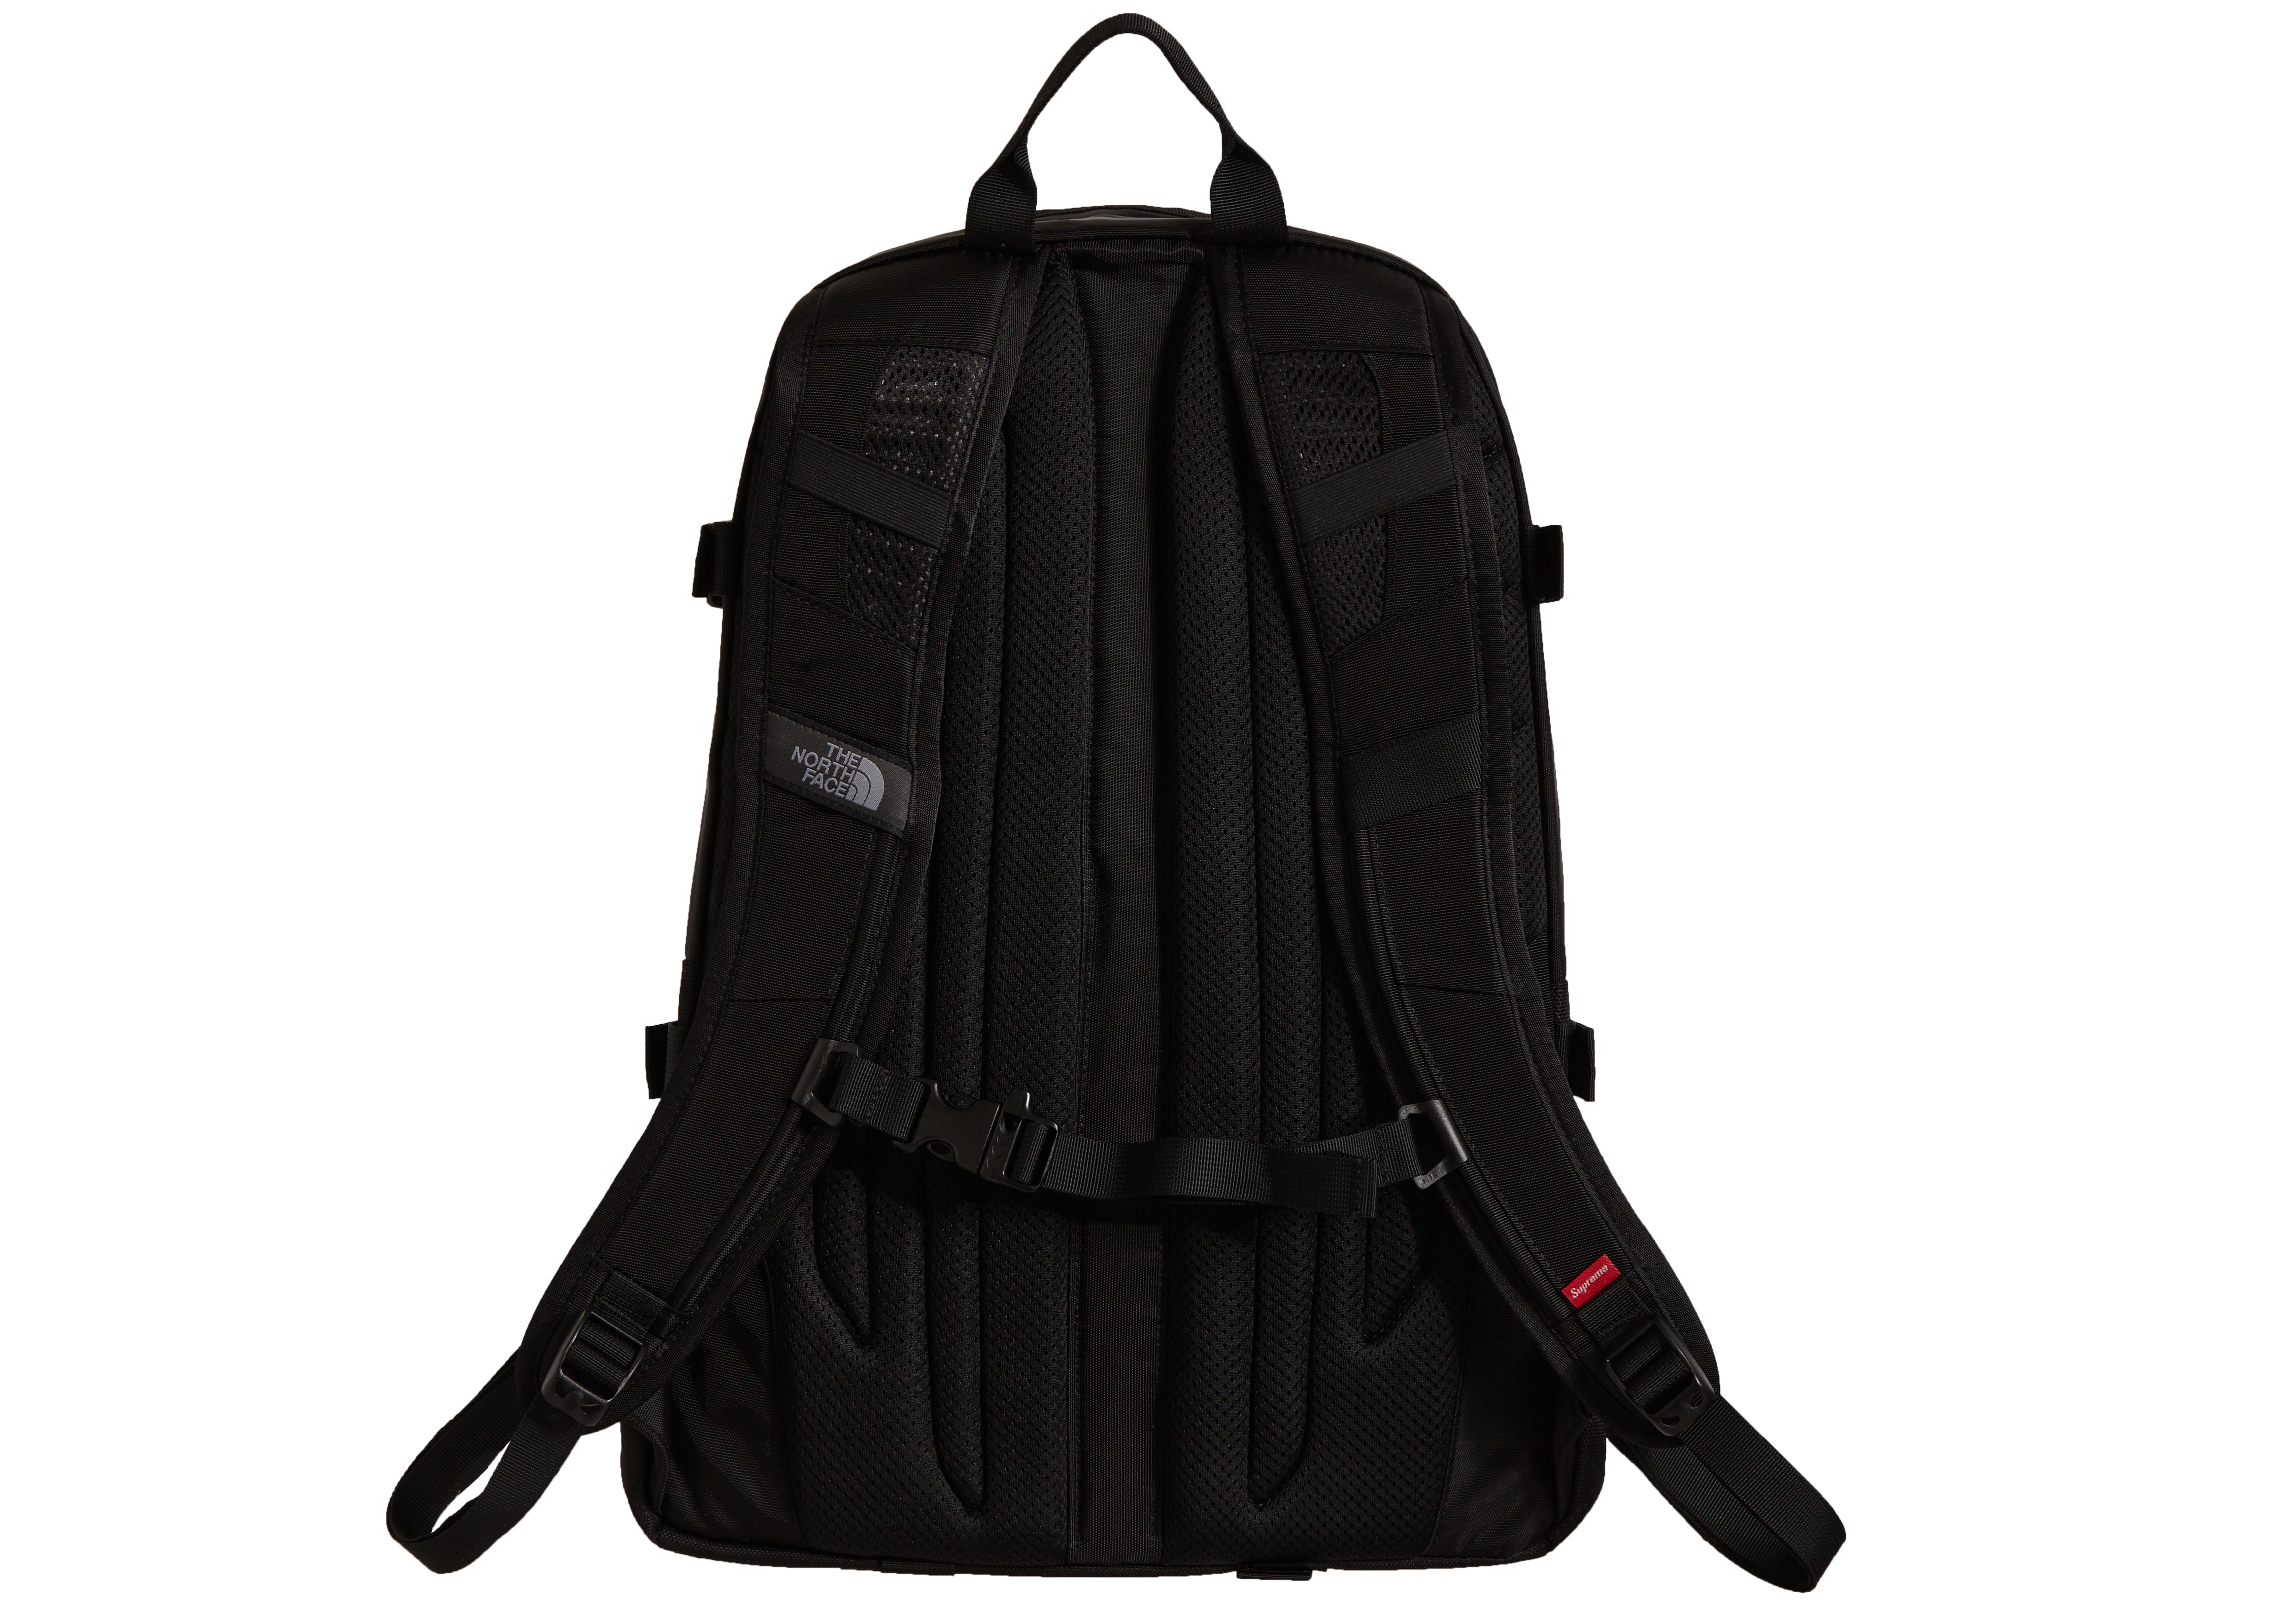 Supreme x The North Face S Logo Expedition Backpack Black - Novelship